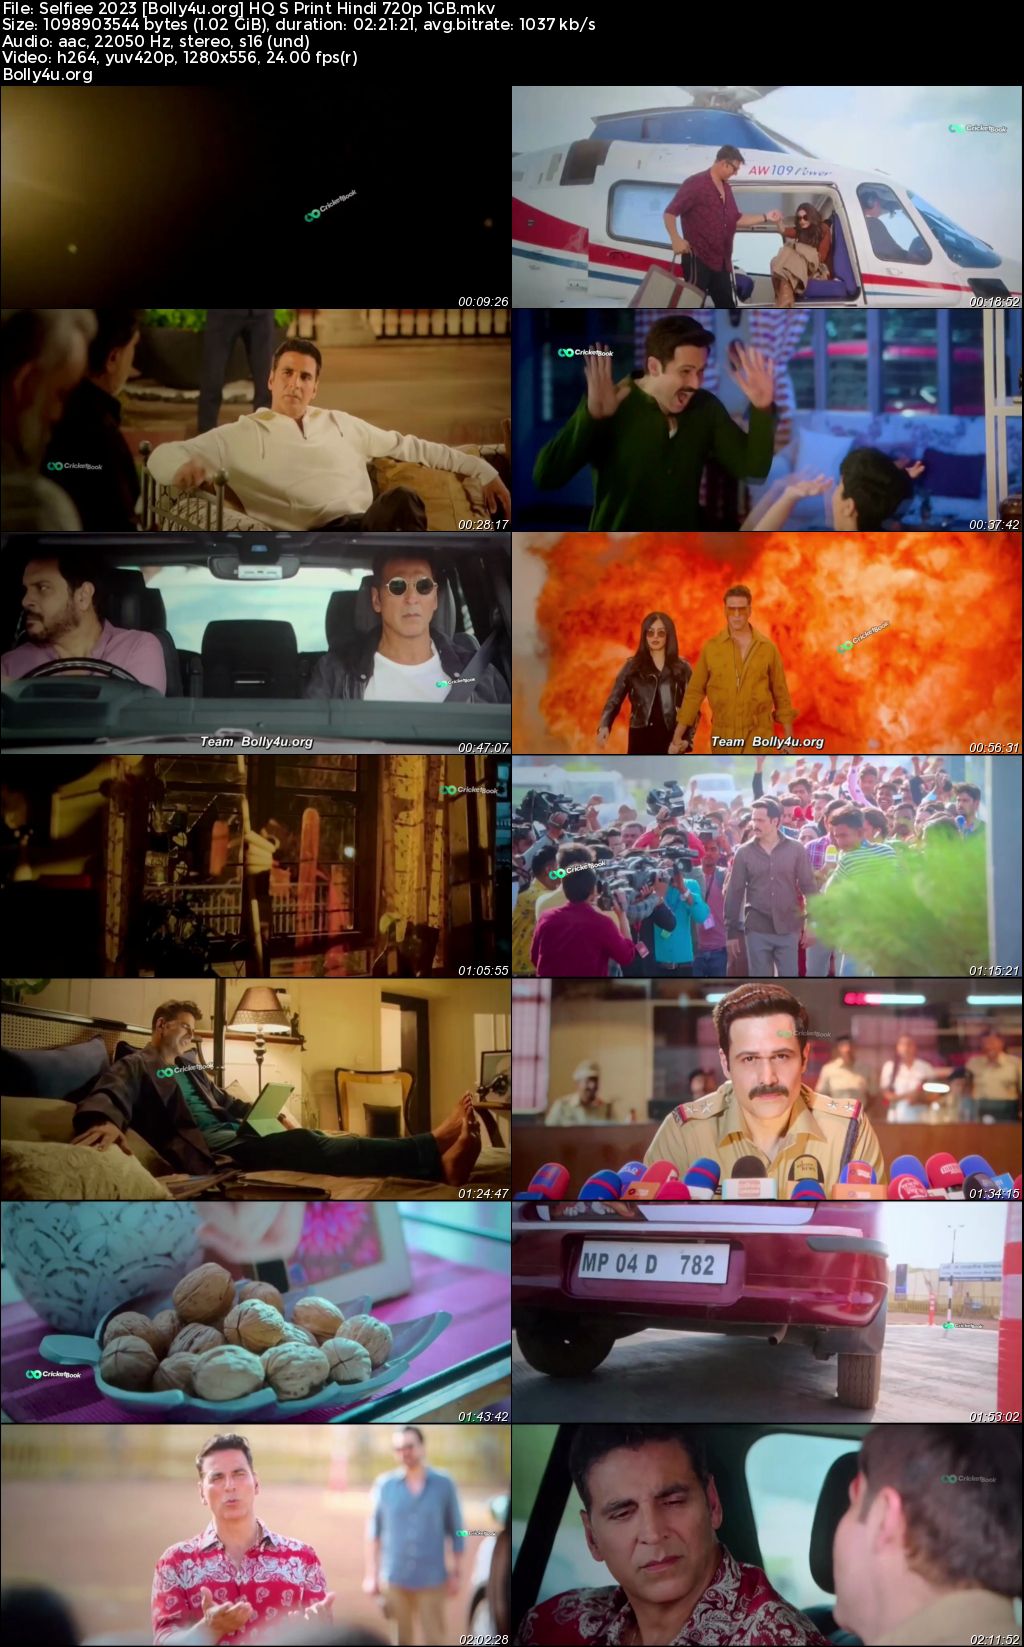 Selfiee 2023 HQ S Print Hindi Full Movie Download 1080p 720p 480p